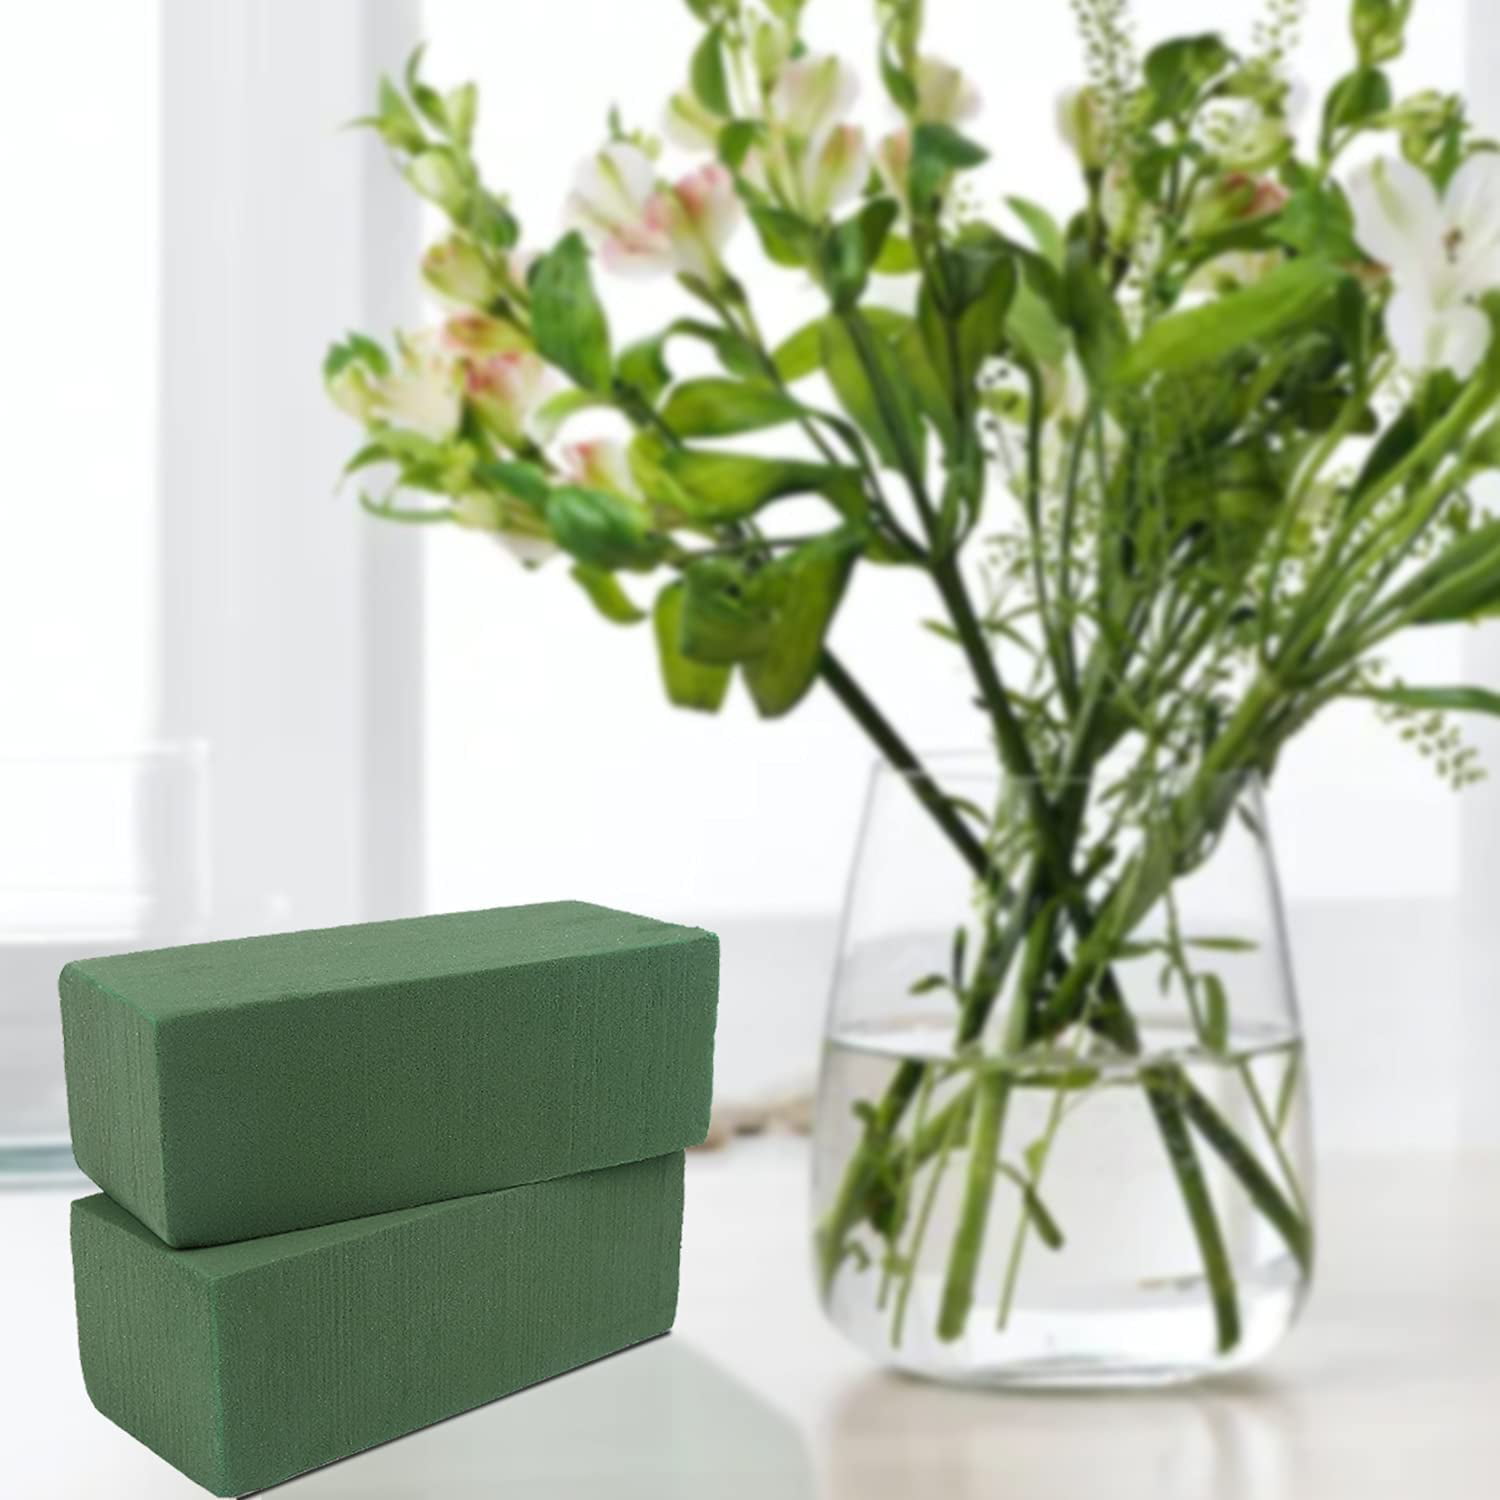 6Pcs Floral Foam Blocks Each (8.85”L x 4.1”Wx 2.75”H) Green Wet & Dry  Flower Foam for Fresh & Artificial Flower Arrangements, DIY Crafts, Arts